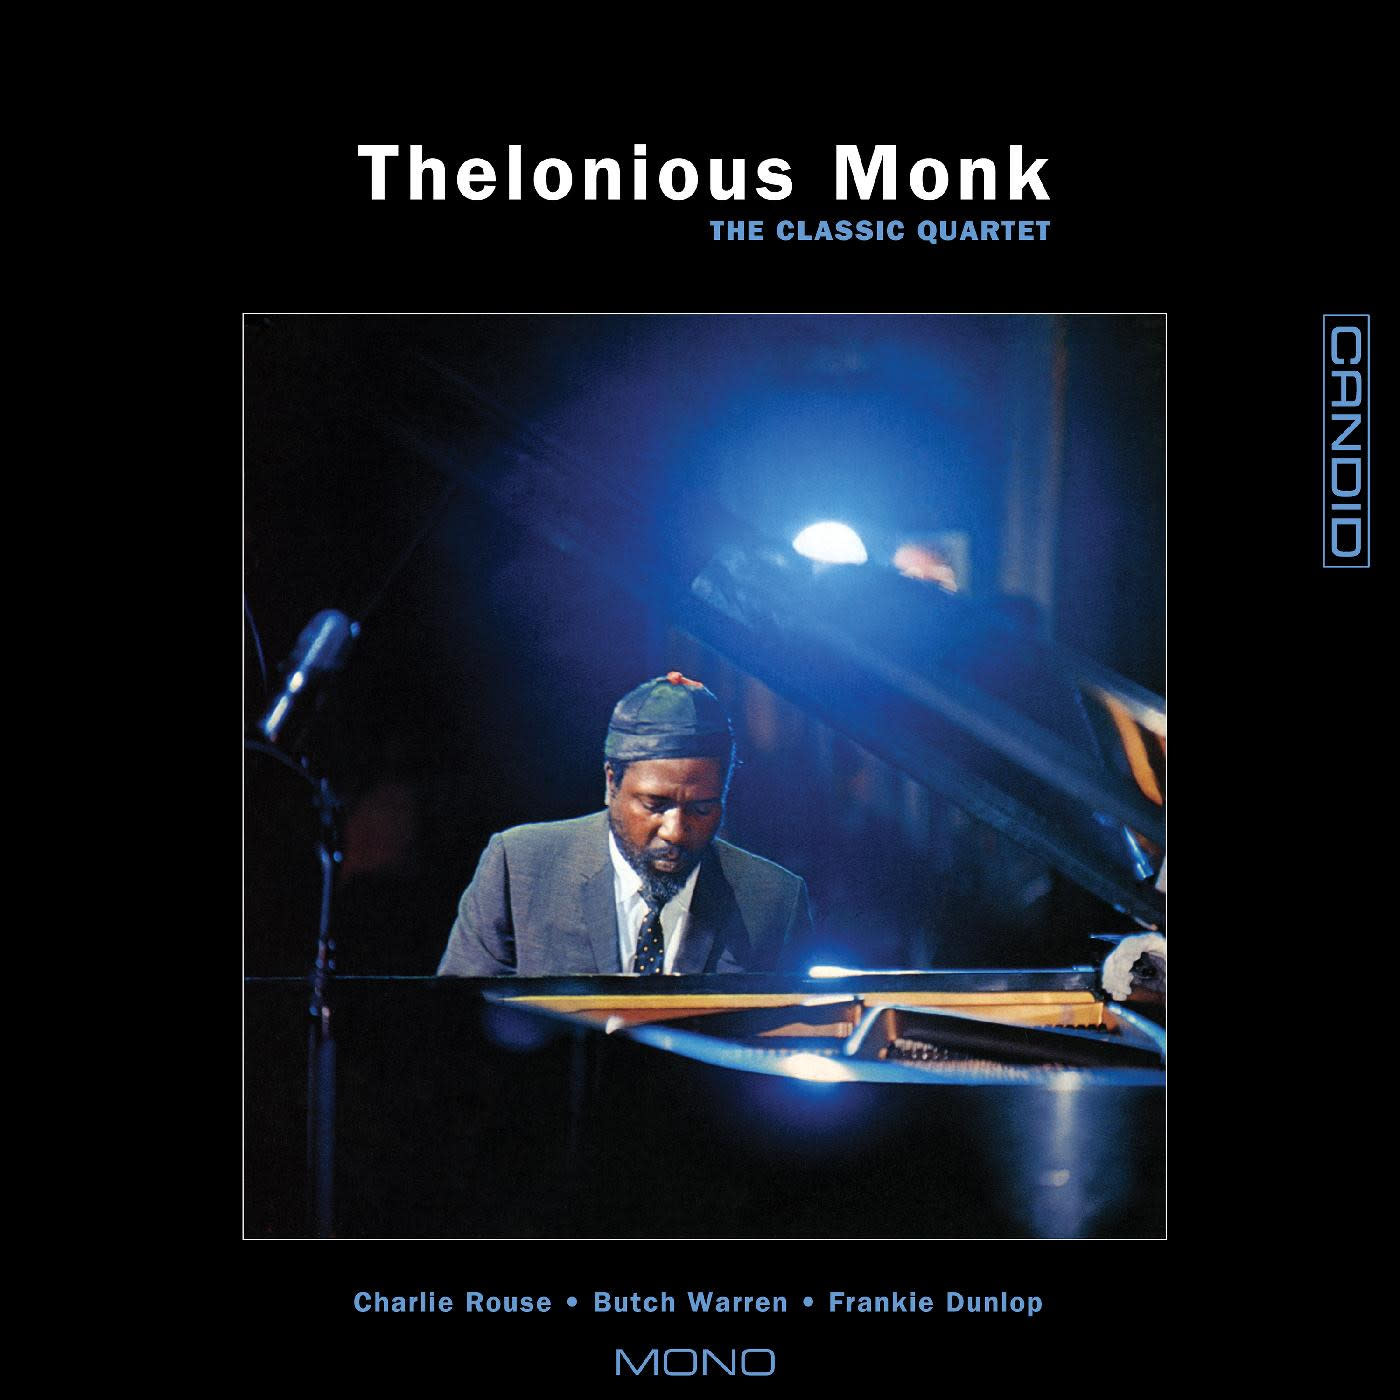 Thelonious Monk - The Classic Quartet (Remastered, Mono, 180g) LP